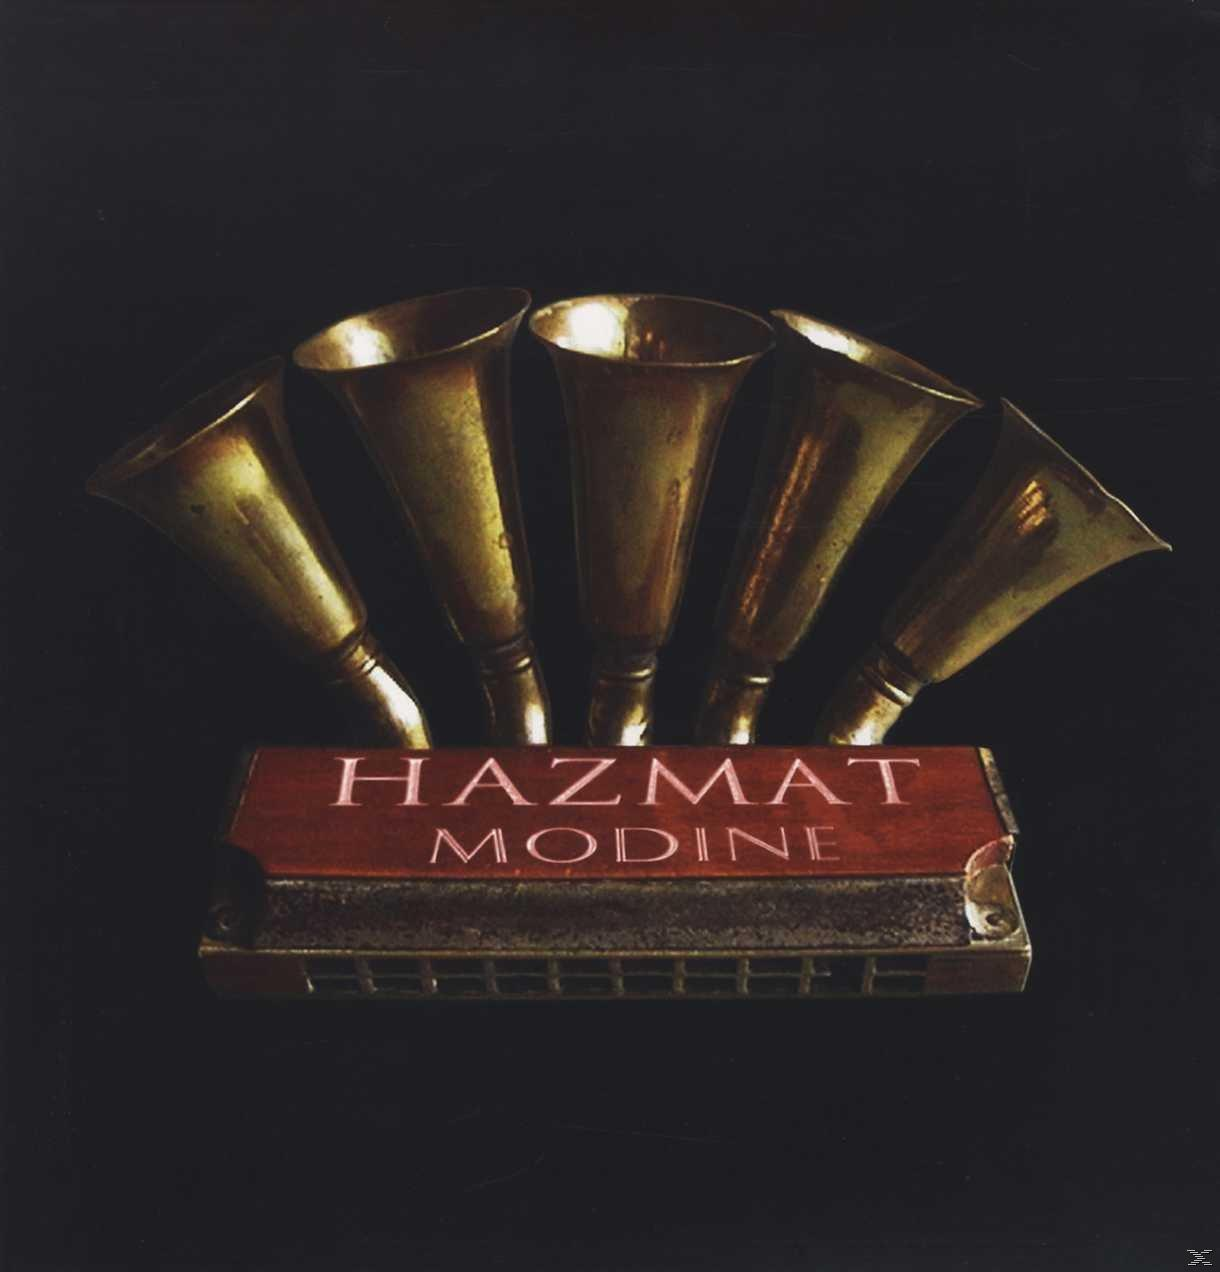 (Vinyl) Modine Hazmat Modine - - Hazmat